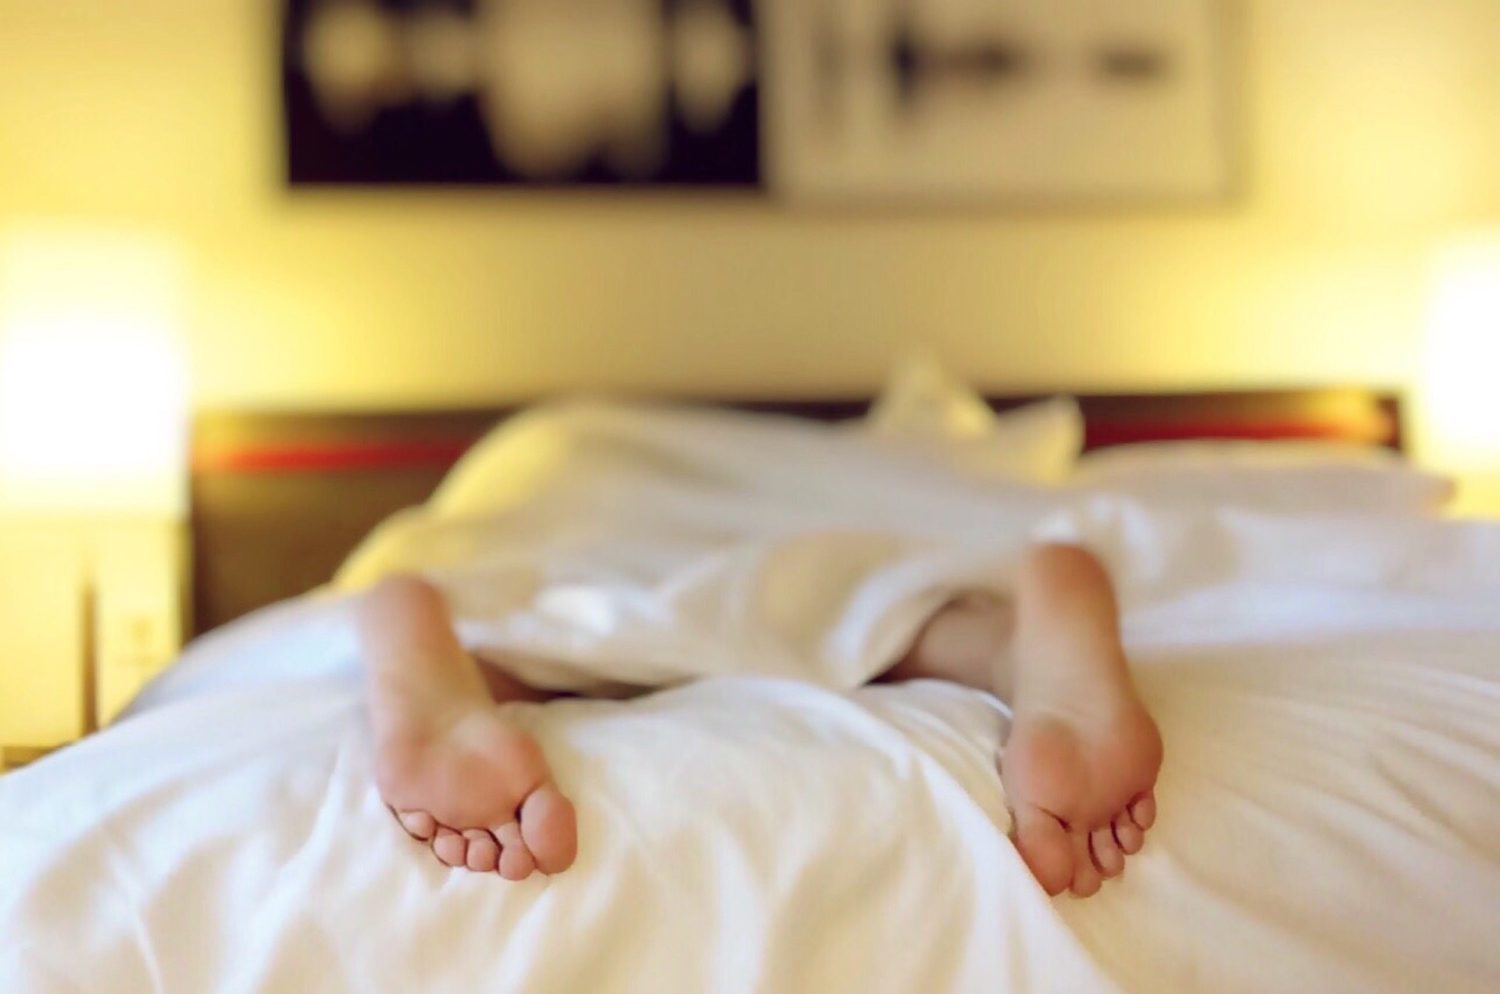 How can sleep affect our brains?